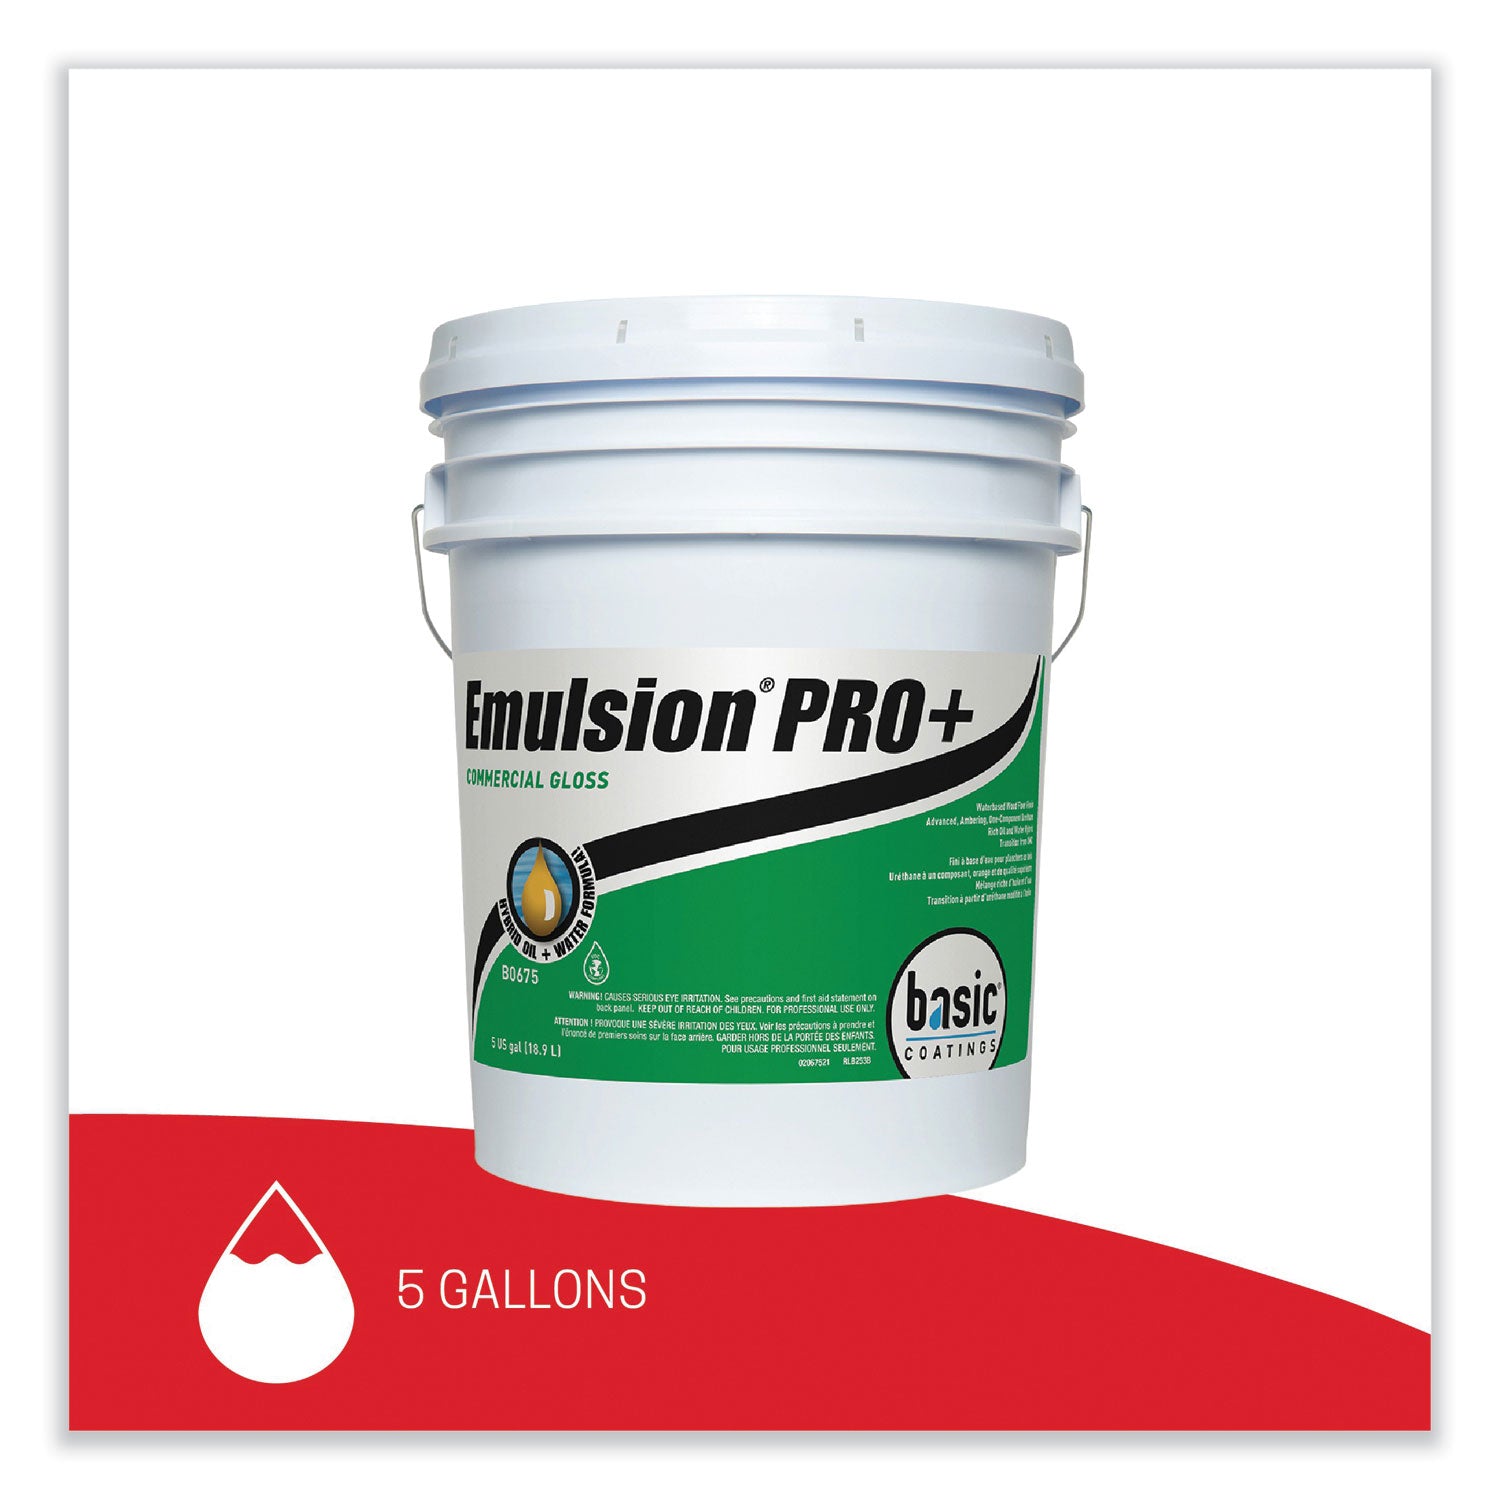 emulsion-pro+-floor-finish-and-sealer-5-gal-pail_betb06750512 - 2